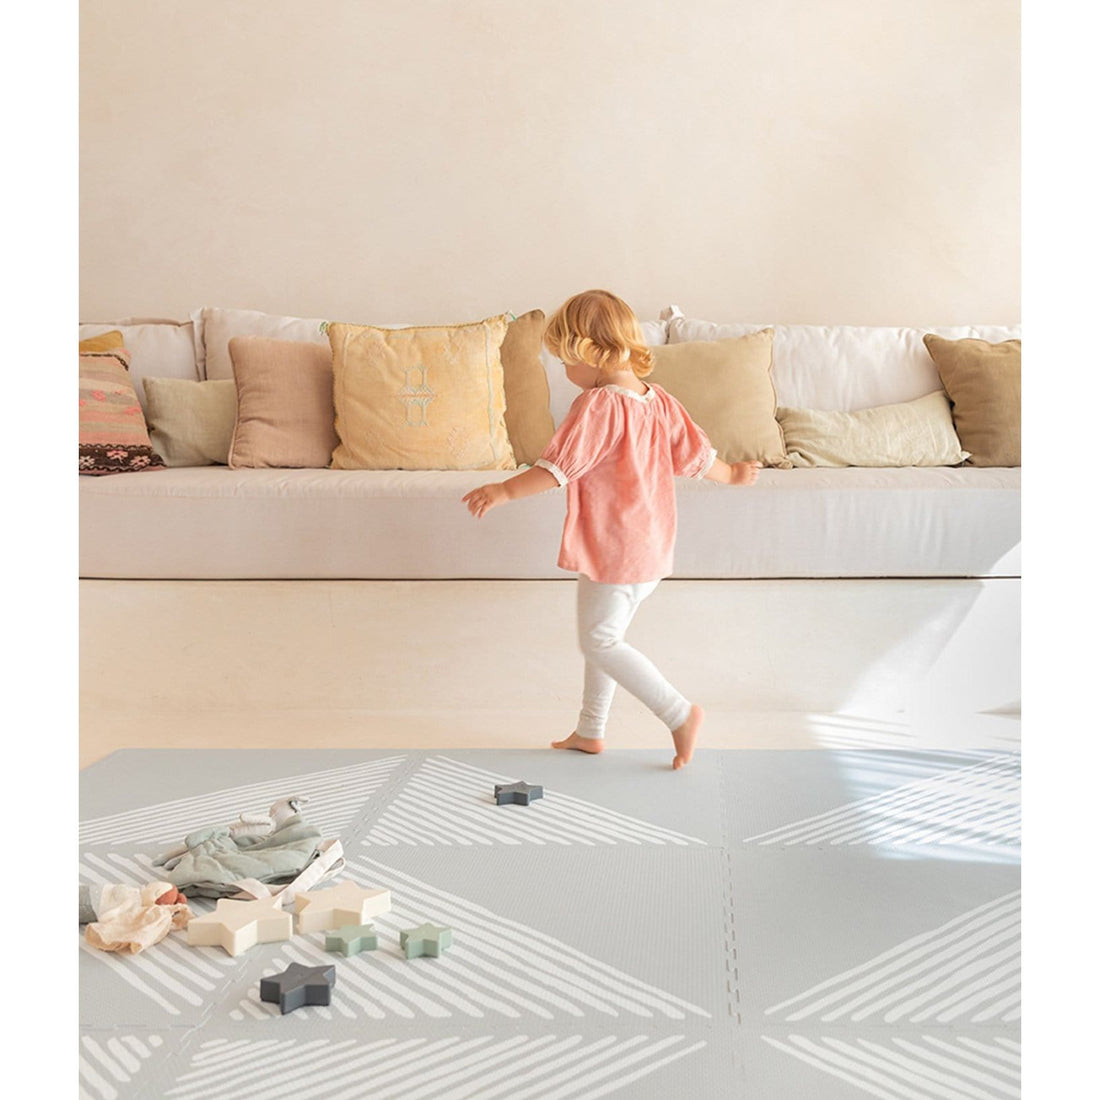 toddlekind-prettier-playmat-sand-line-stone-120x180cm-6-tiles-12-edging-borders-baby-nursery-home-decor-TODK-339065-00_8